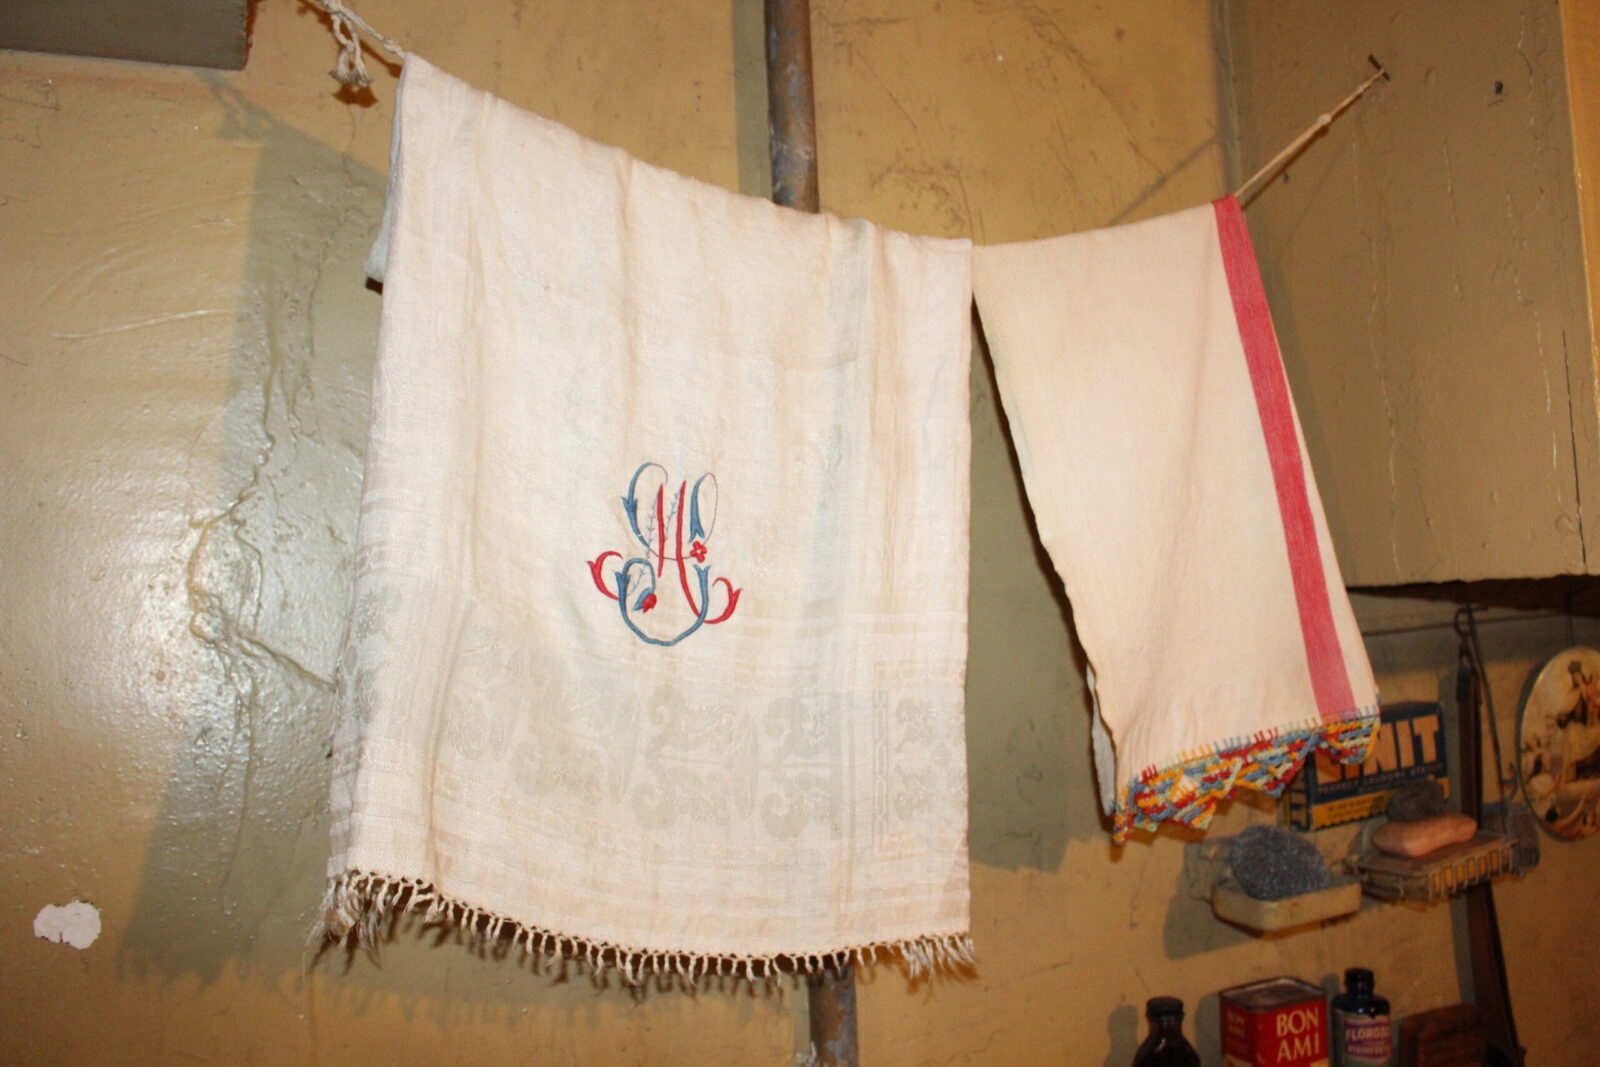 Victoria Confino’s woolen manta (blanket) and Rosaria Baldizzi’s embroidered dish towels